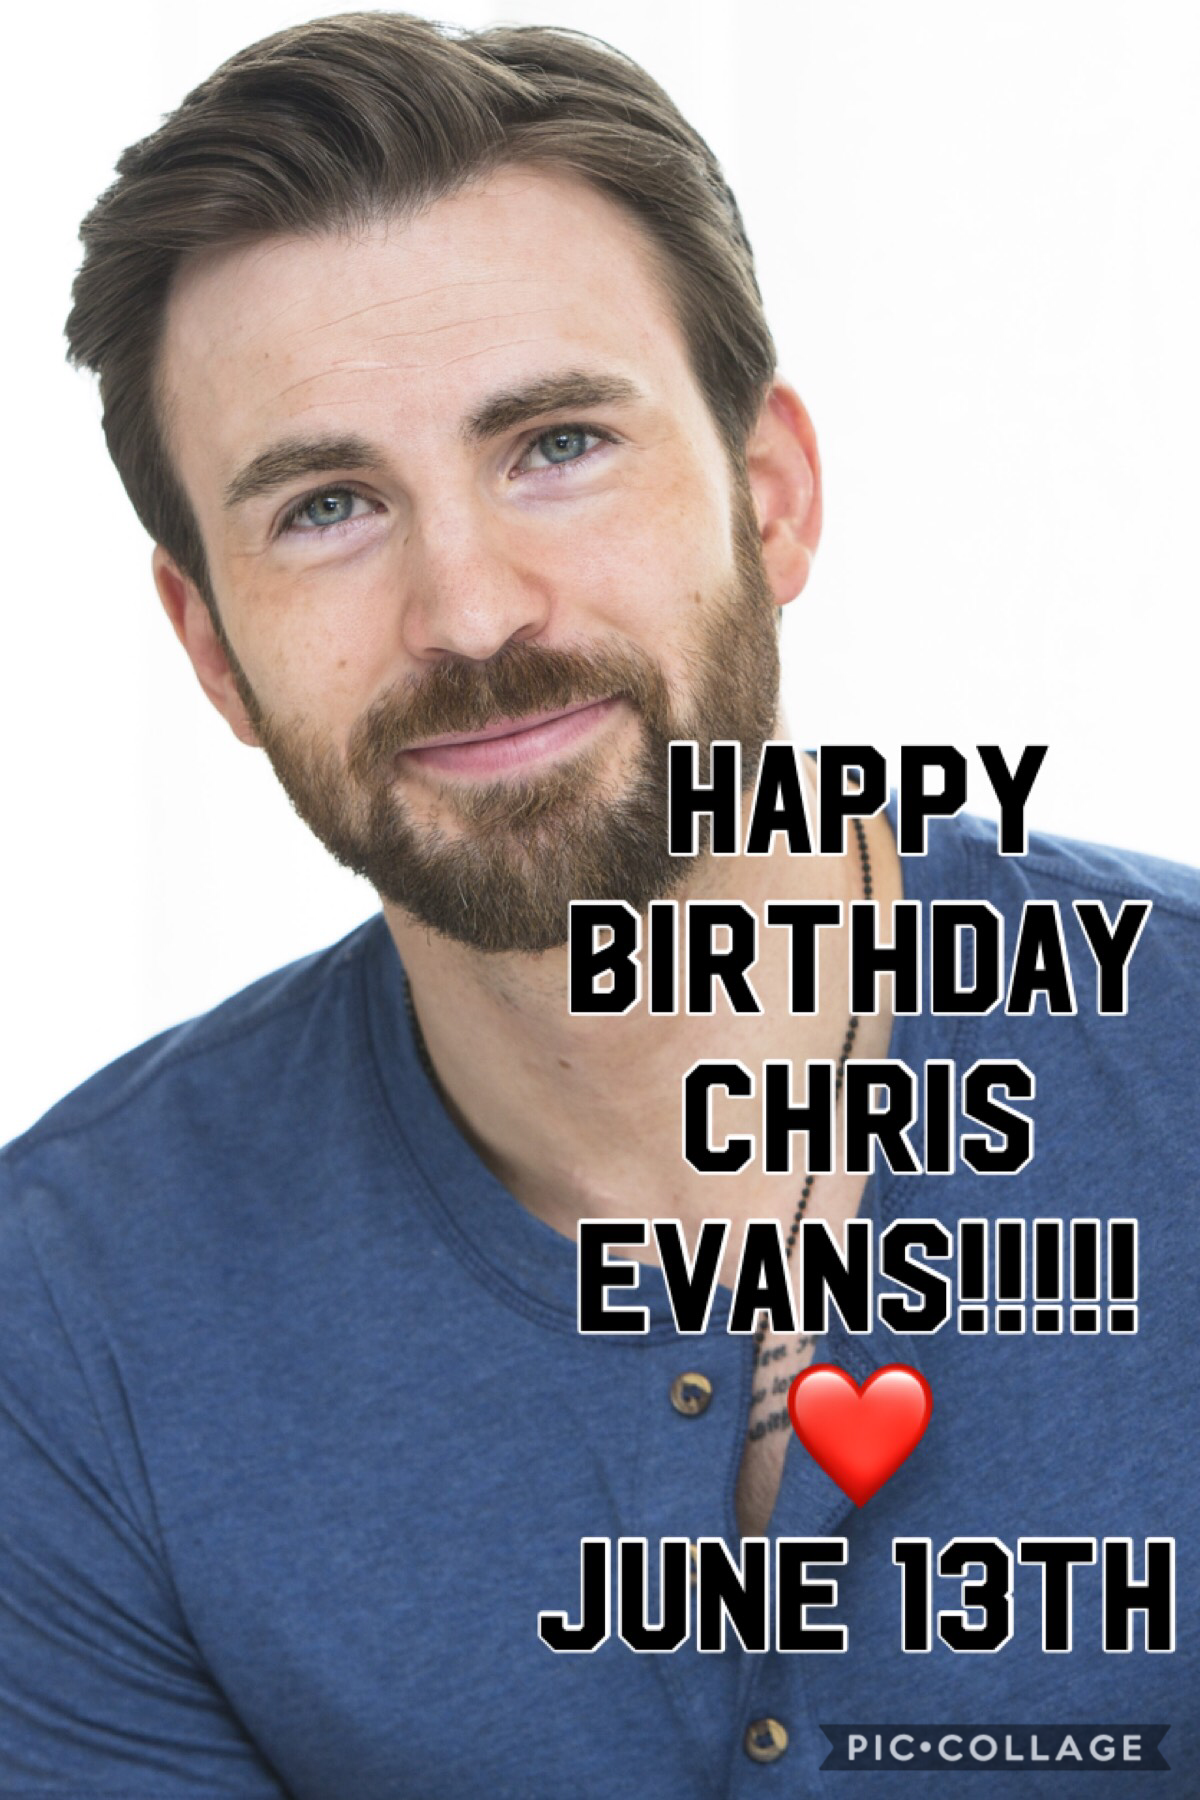 Chris Evans Birthday! ❤️